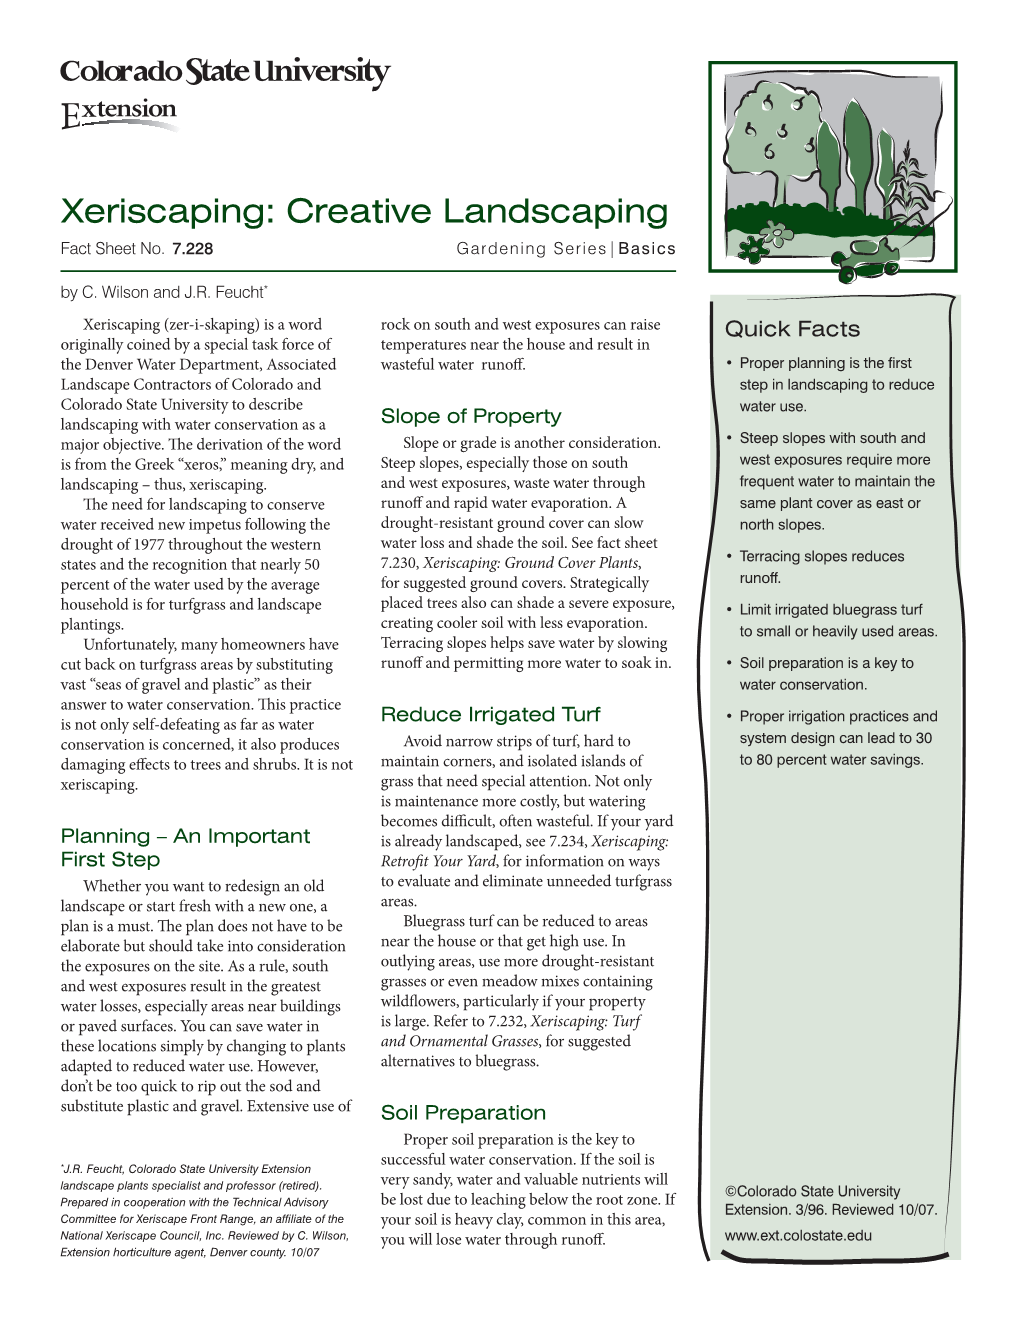 Xeriscaping: Creative Landscaping Fact Sheet No